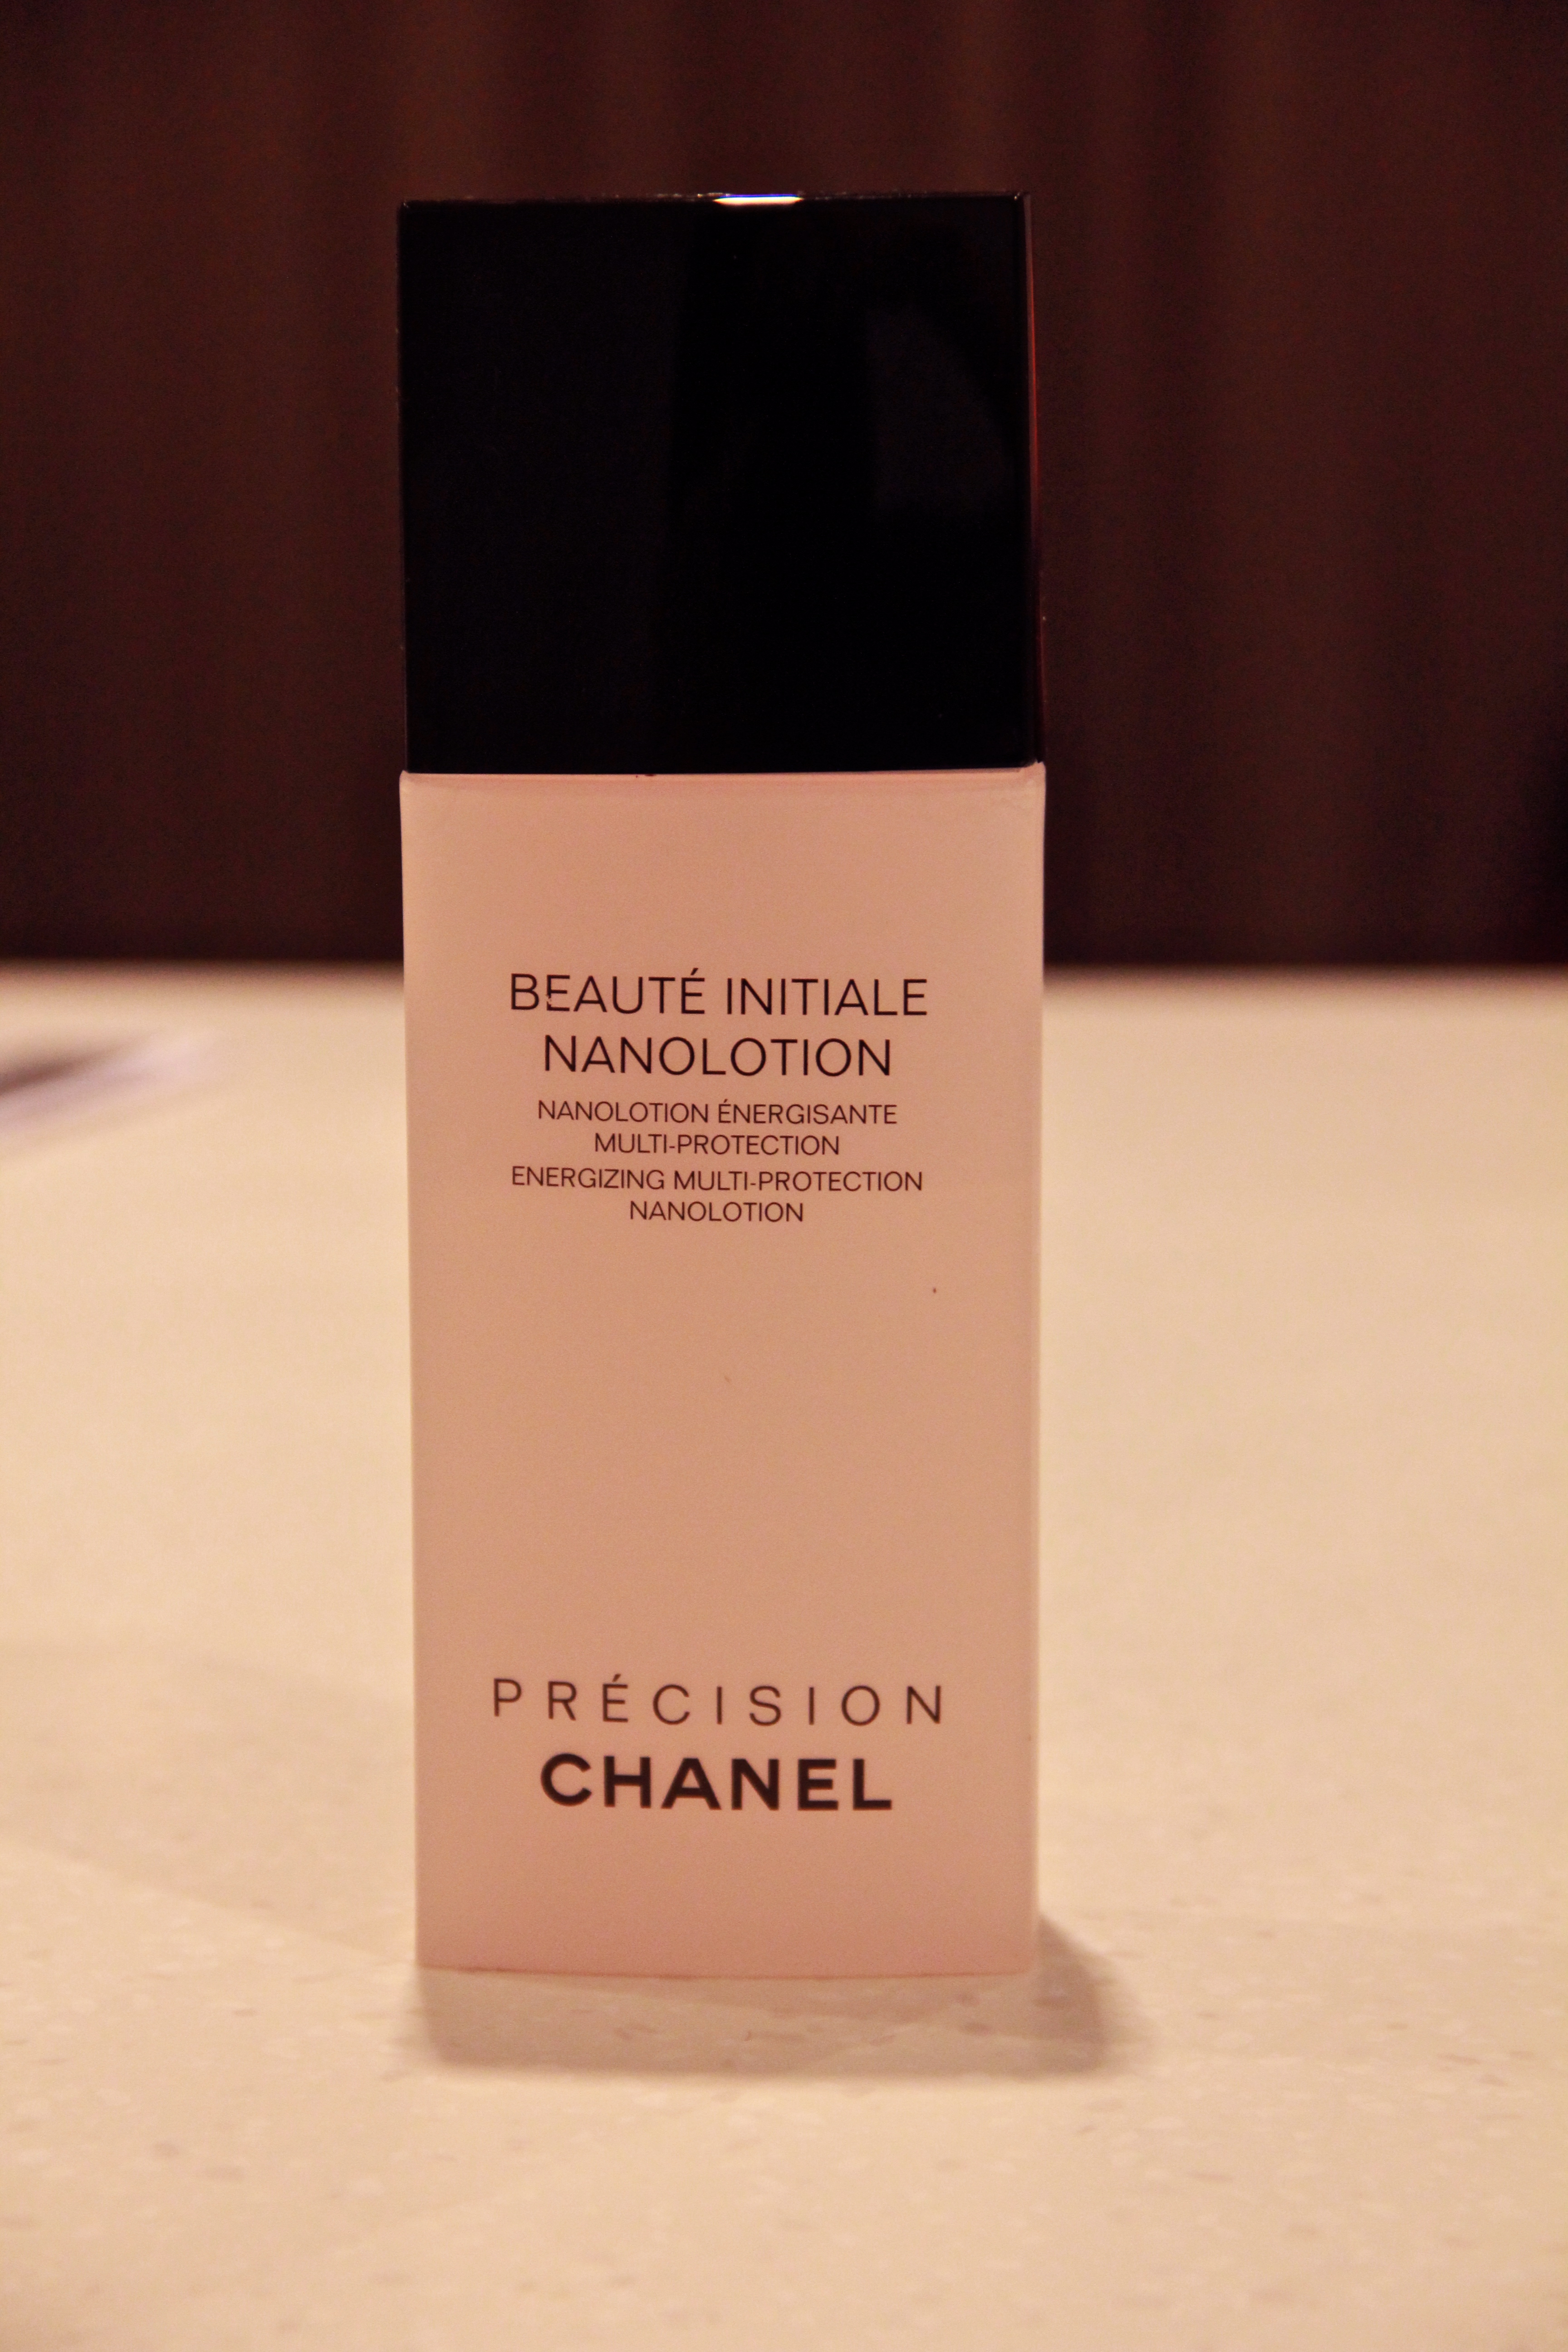 Review: Chanel Beaute Initiale Nanolotion